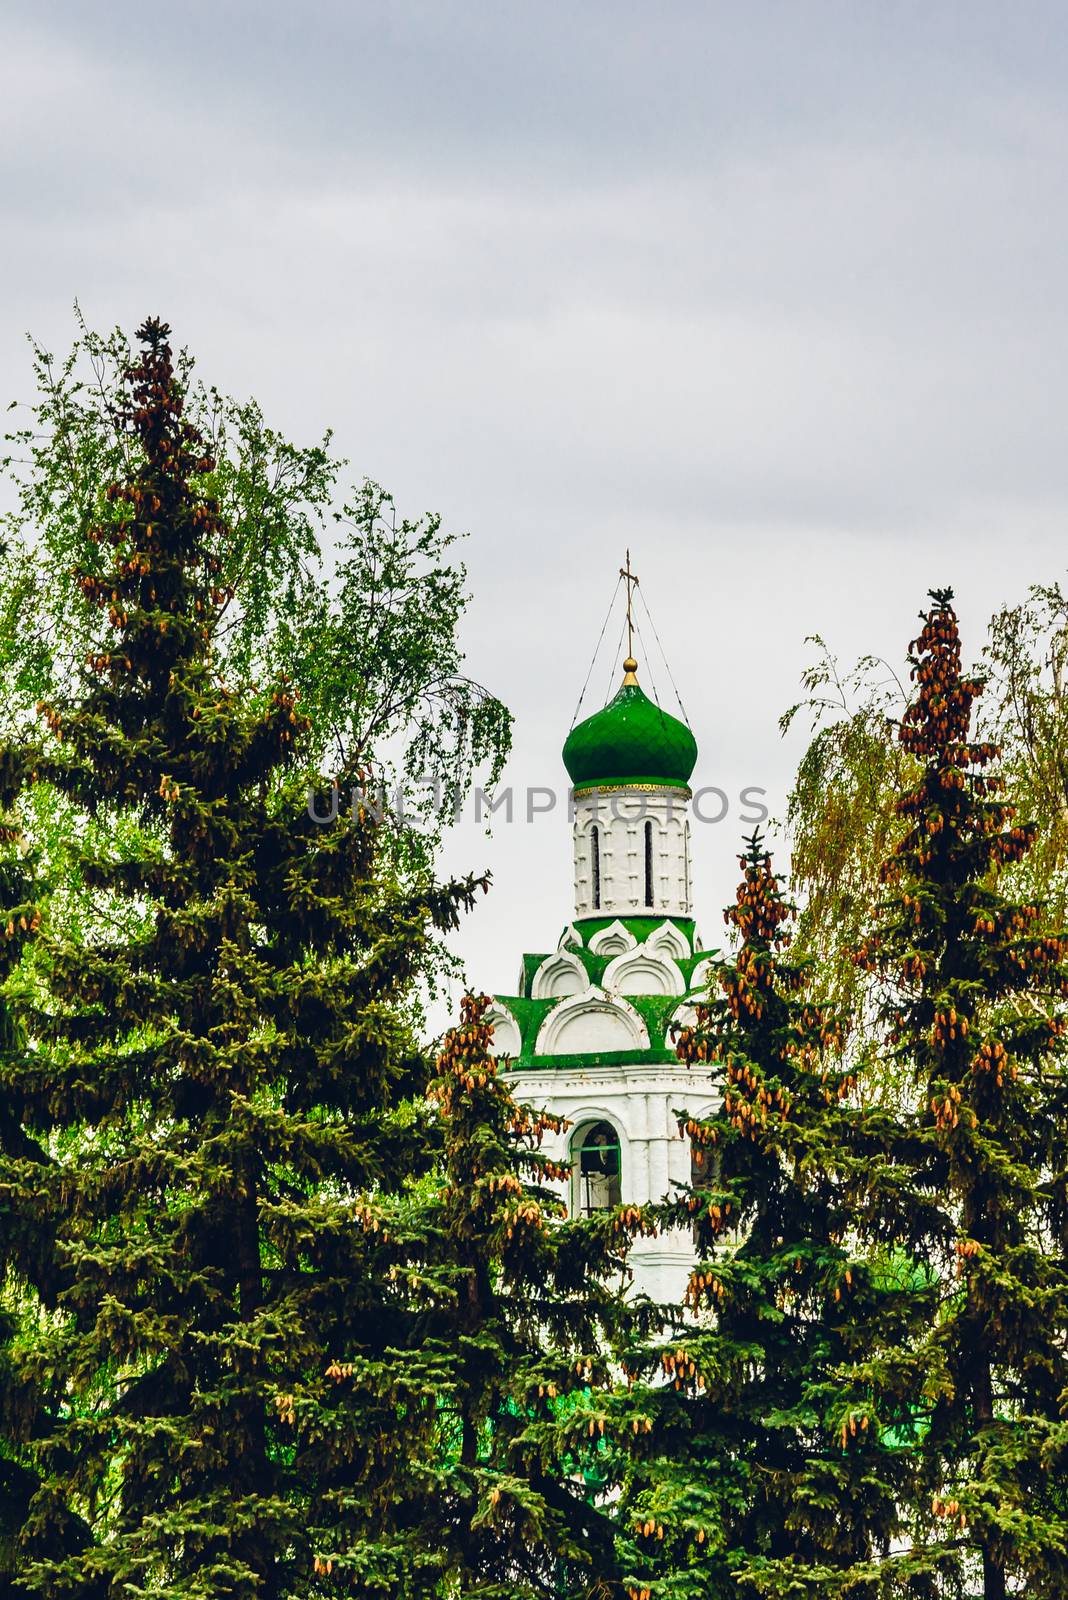 Beautiful Church of St. John the Baptist Monastery between Fir Trees. Kaxan, Russia.